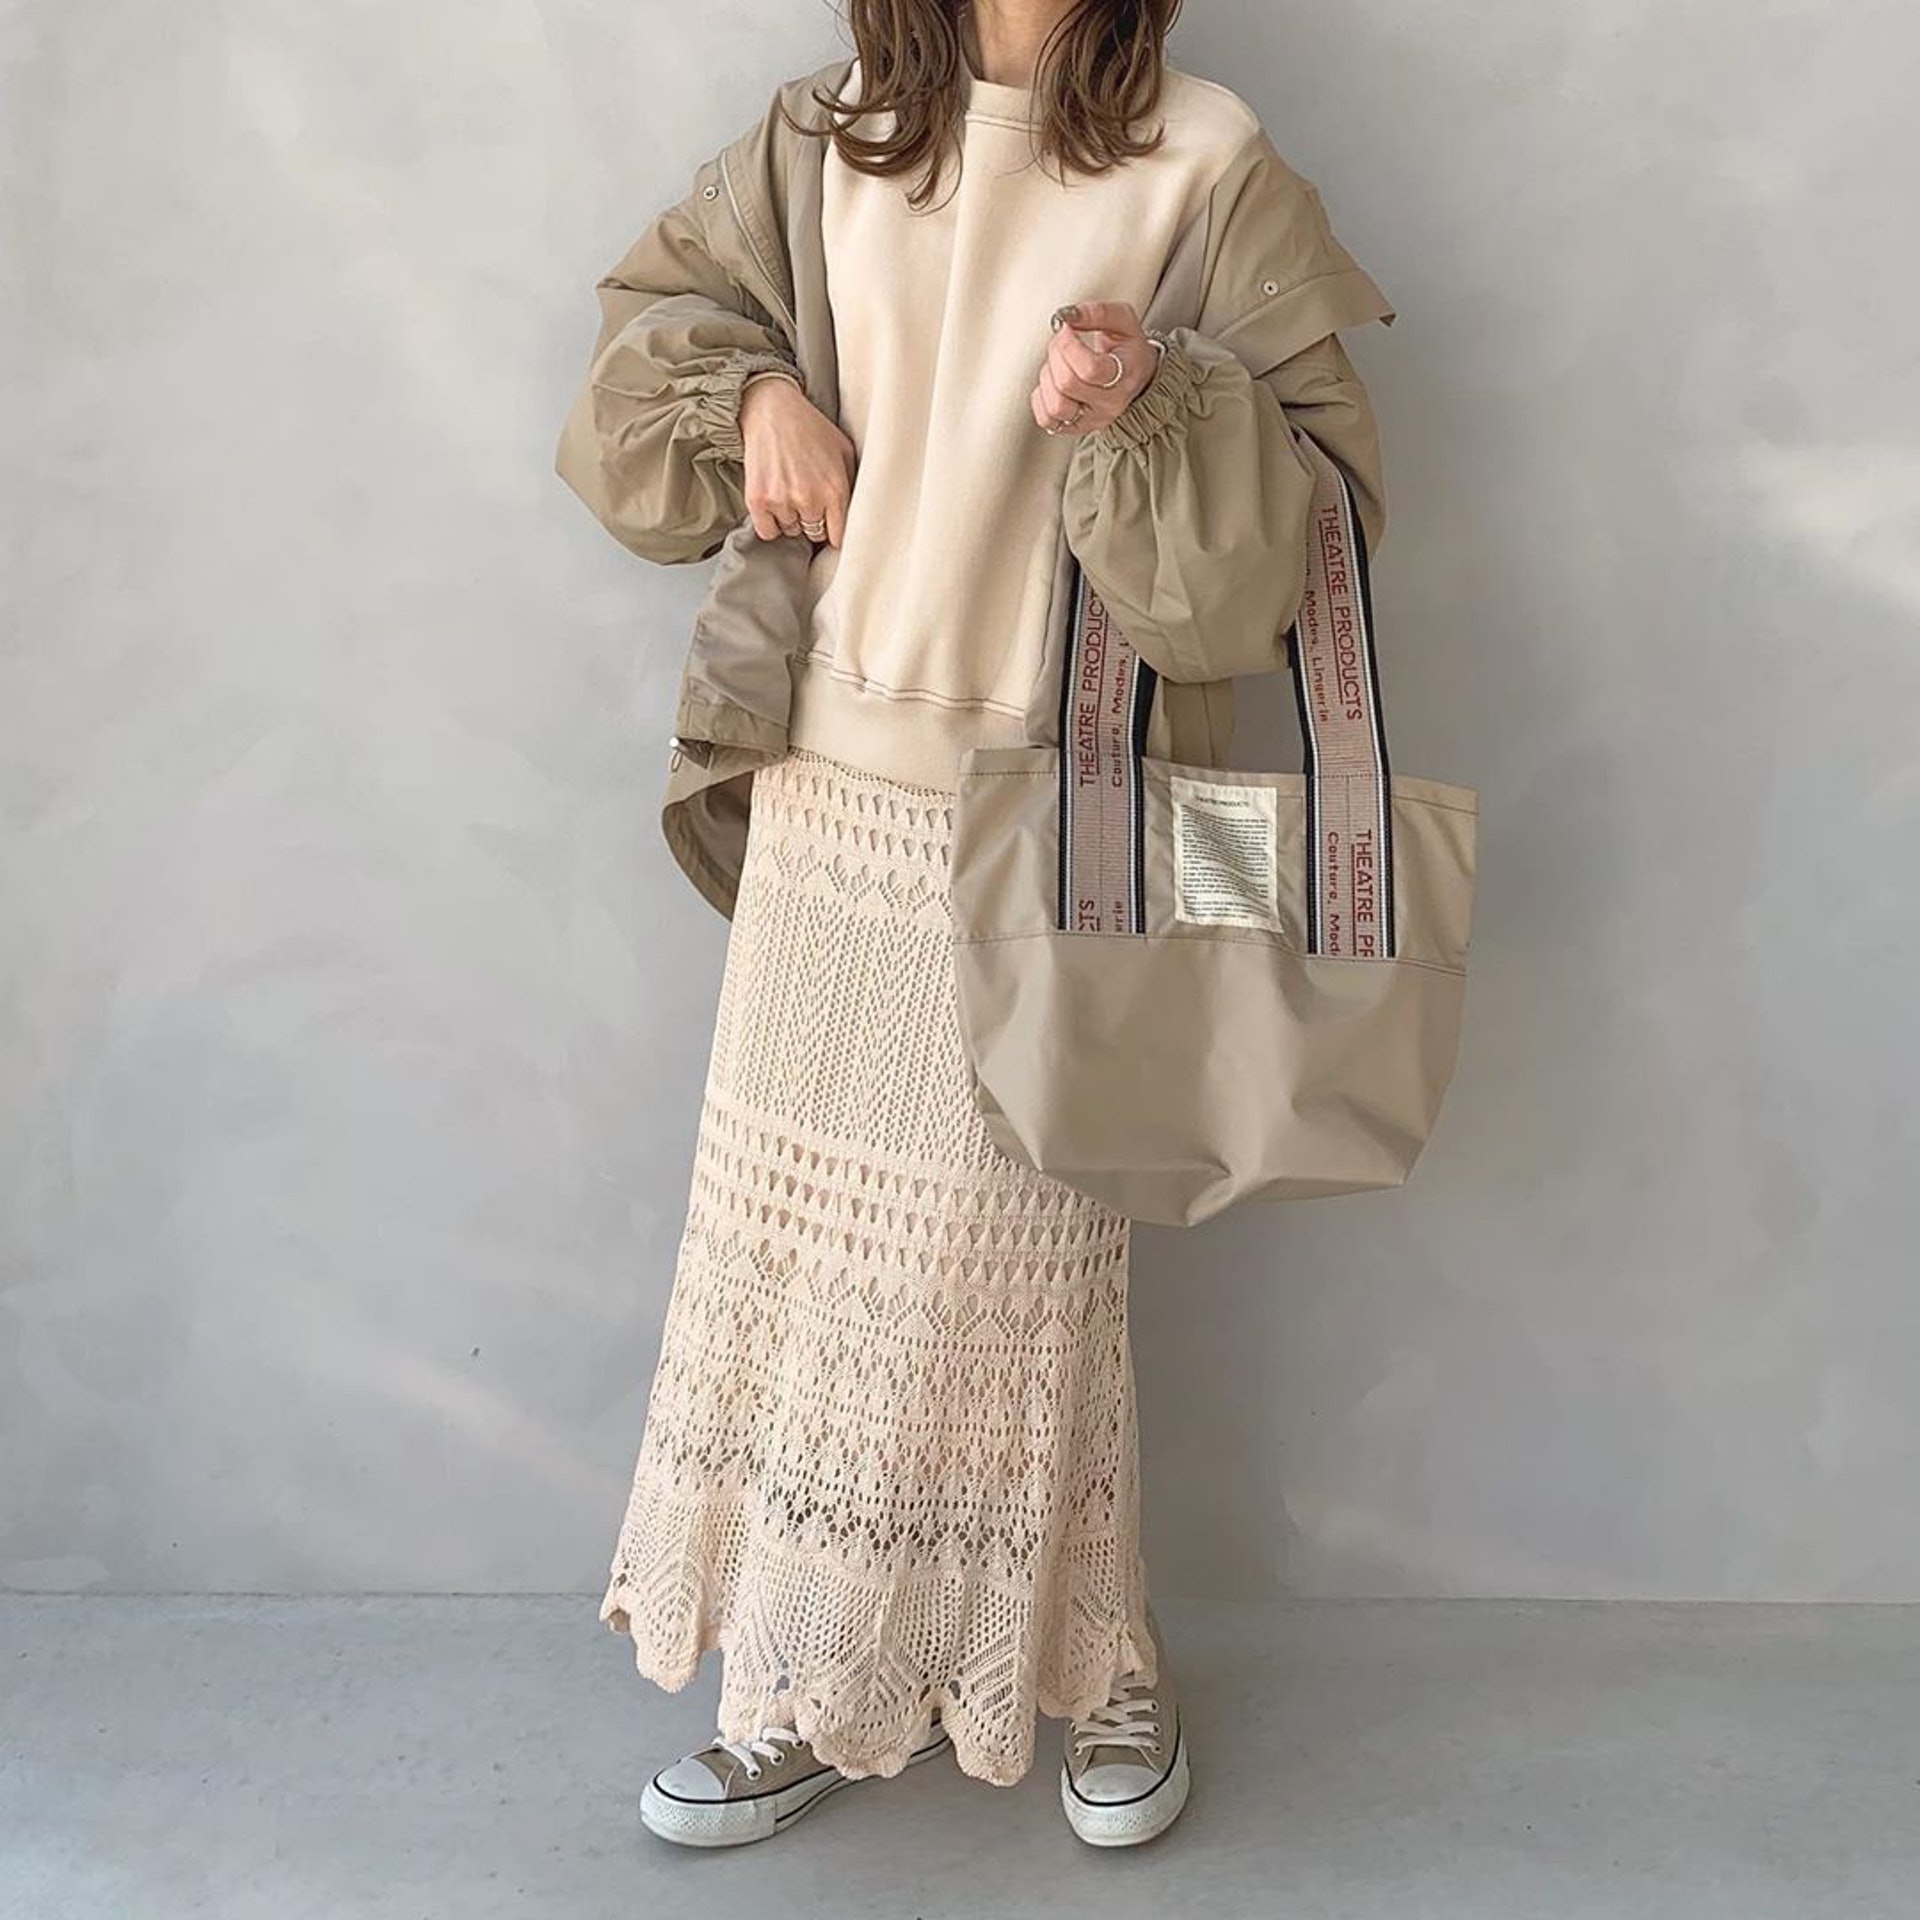 Manami喜愛穿着長裙，不過卻會盡量避免選擇A-Line剪裁。(manamiiin___＠Instagram)